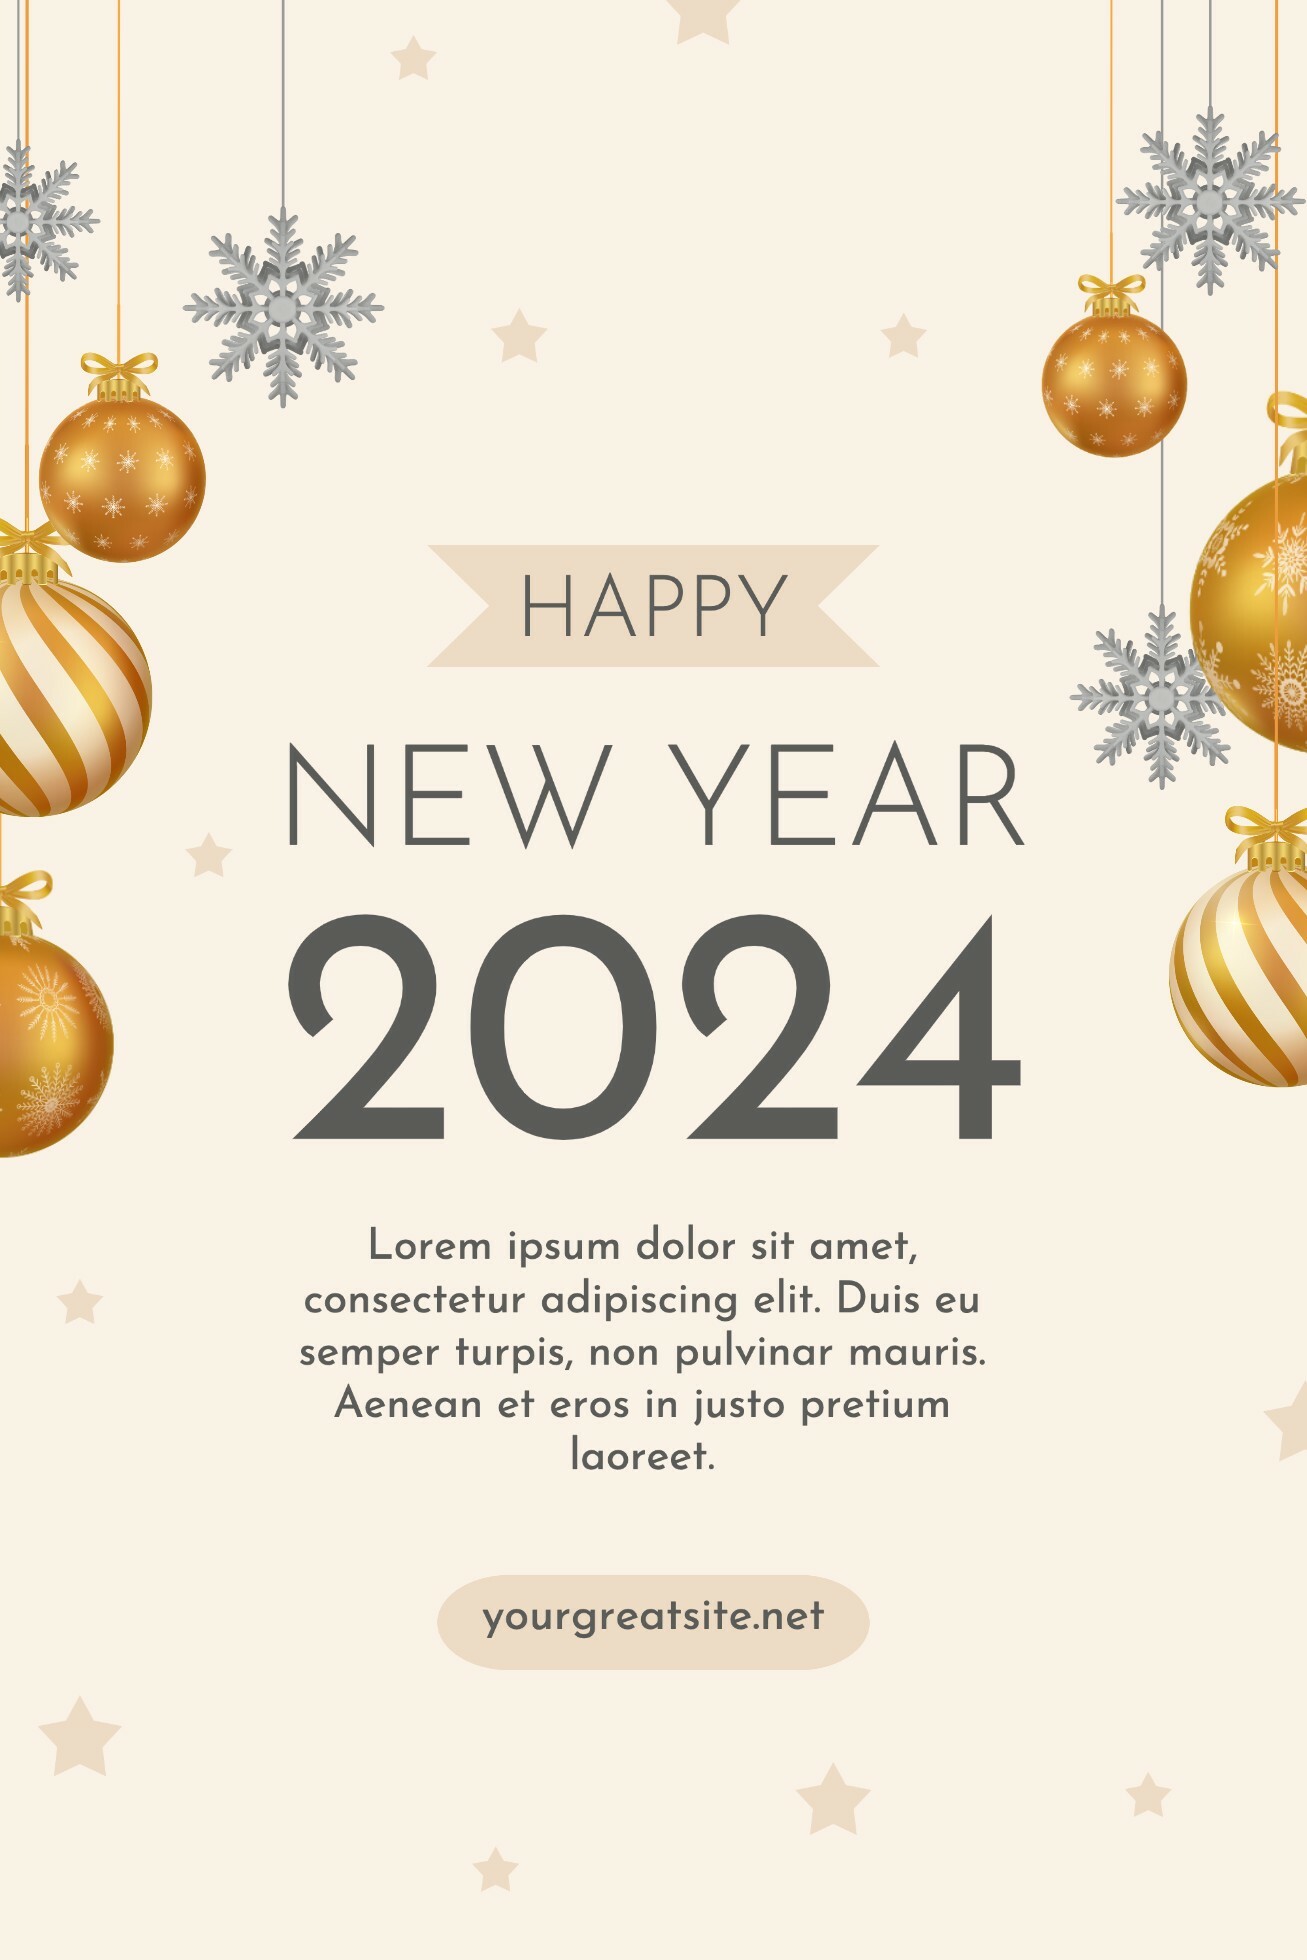 New Year Greeting Pinterest Graphic